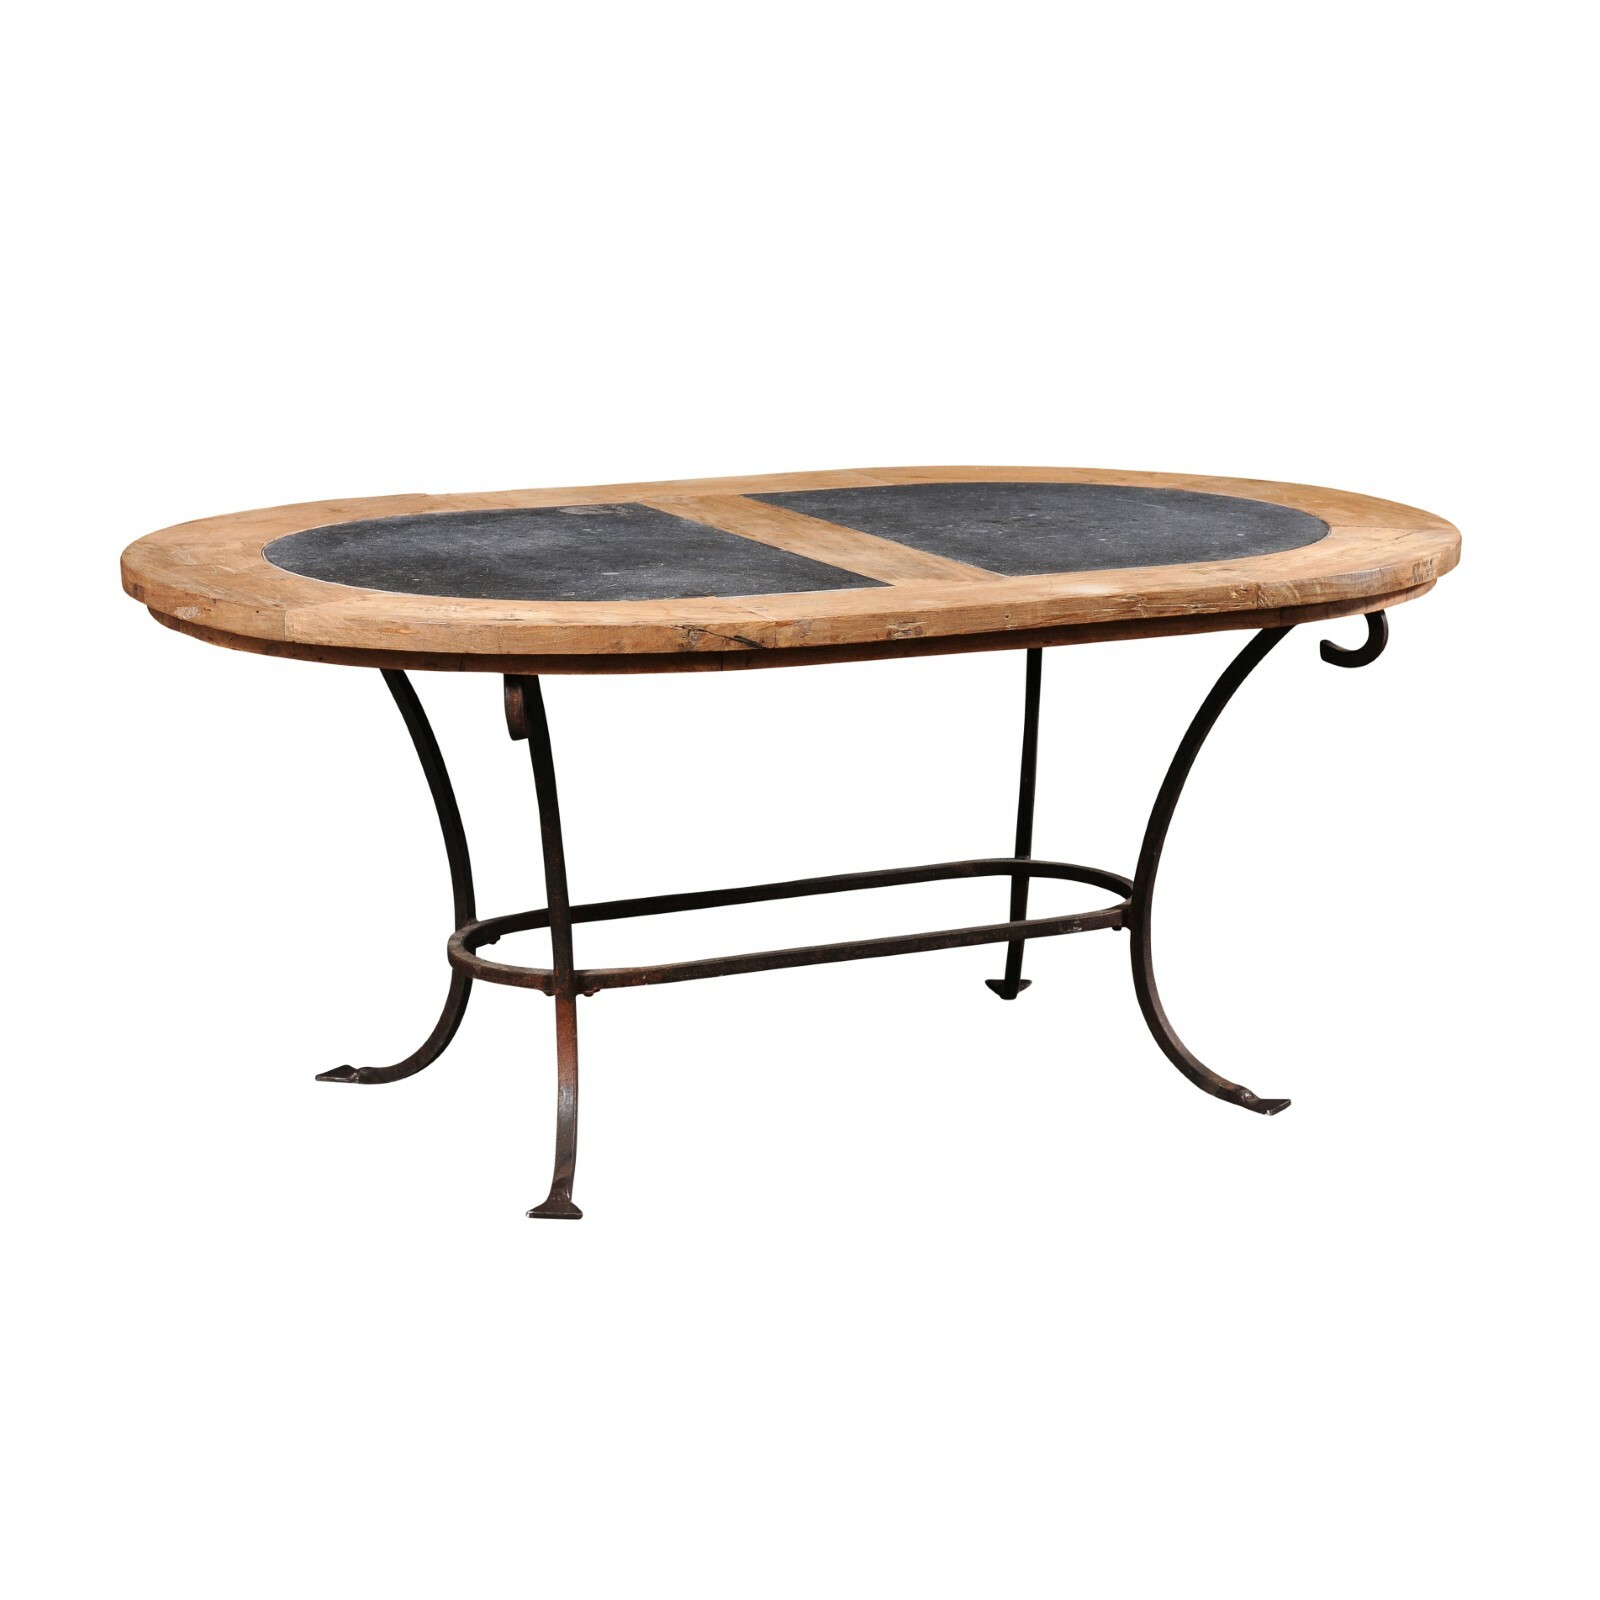 French Stone/Wood Dining Table on Iron Base